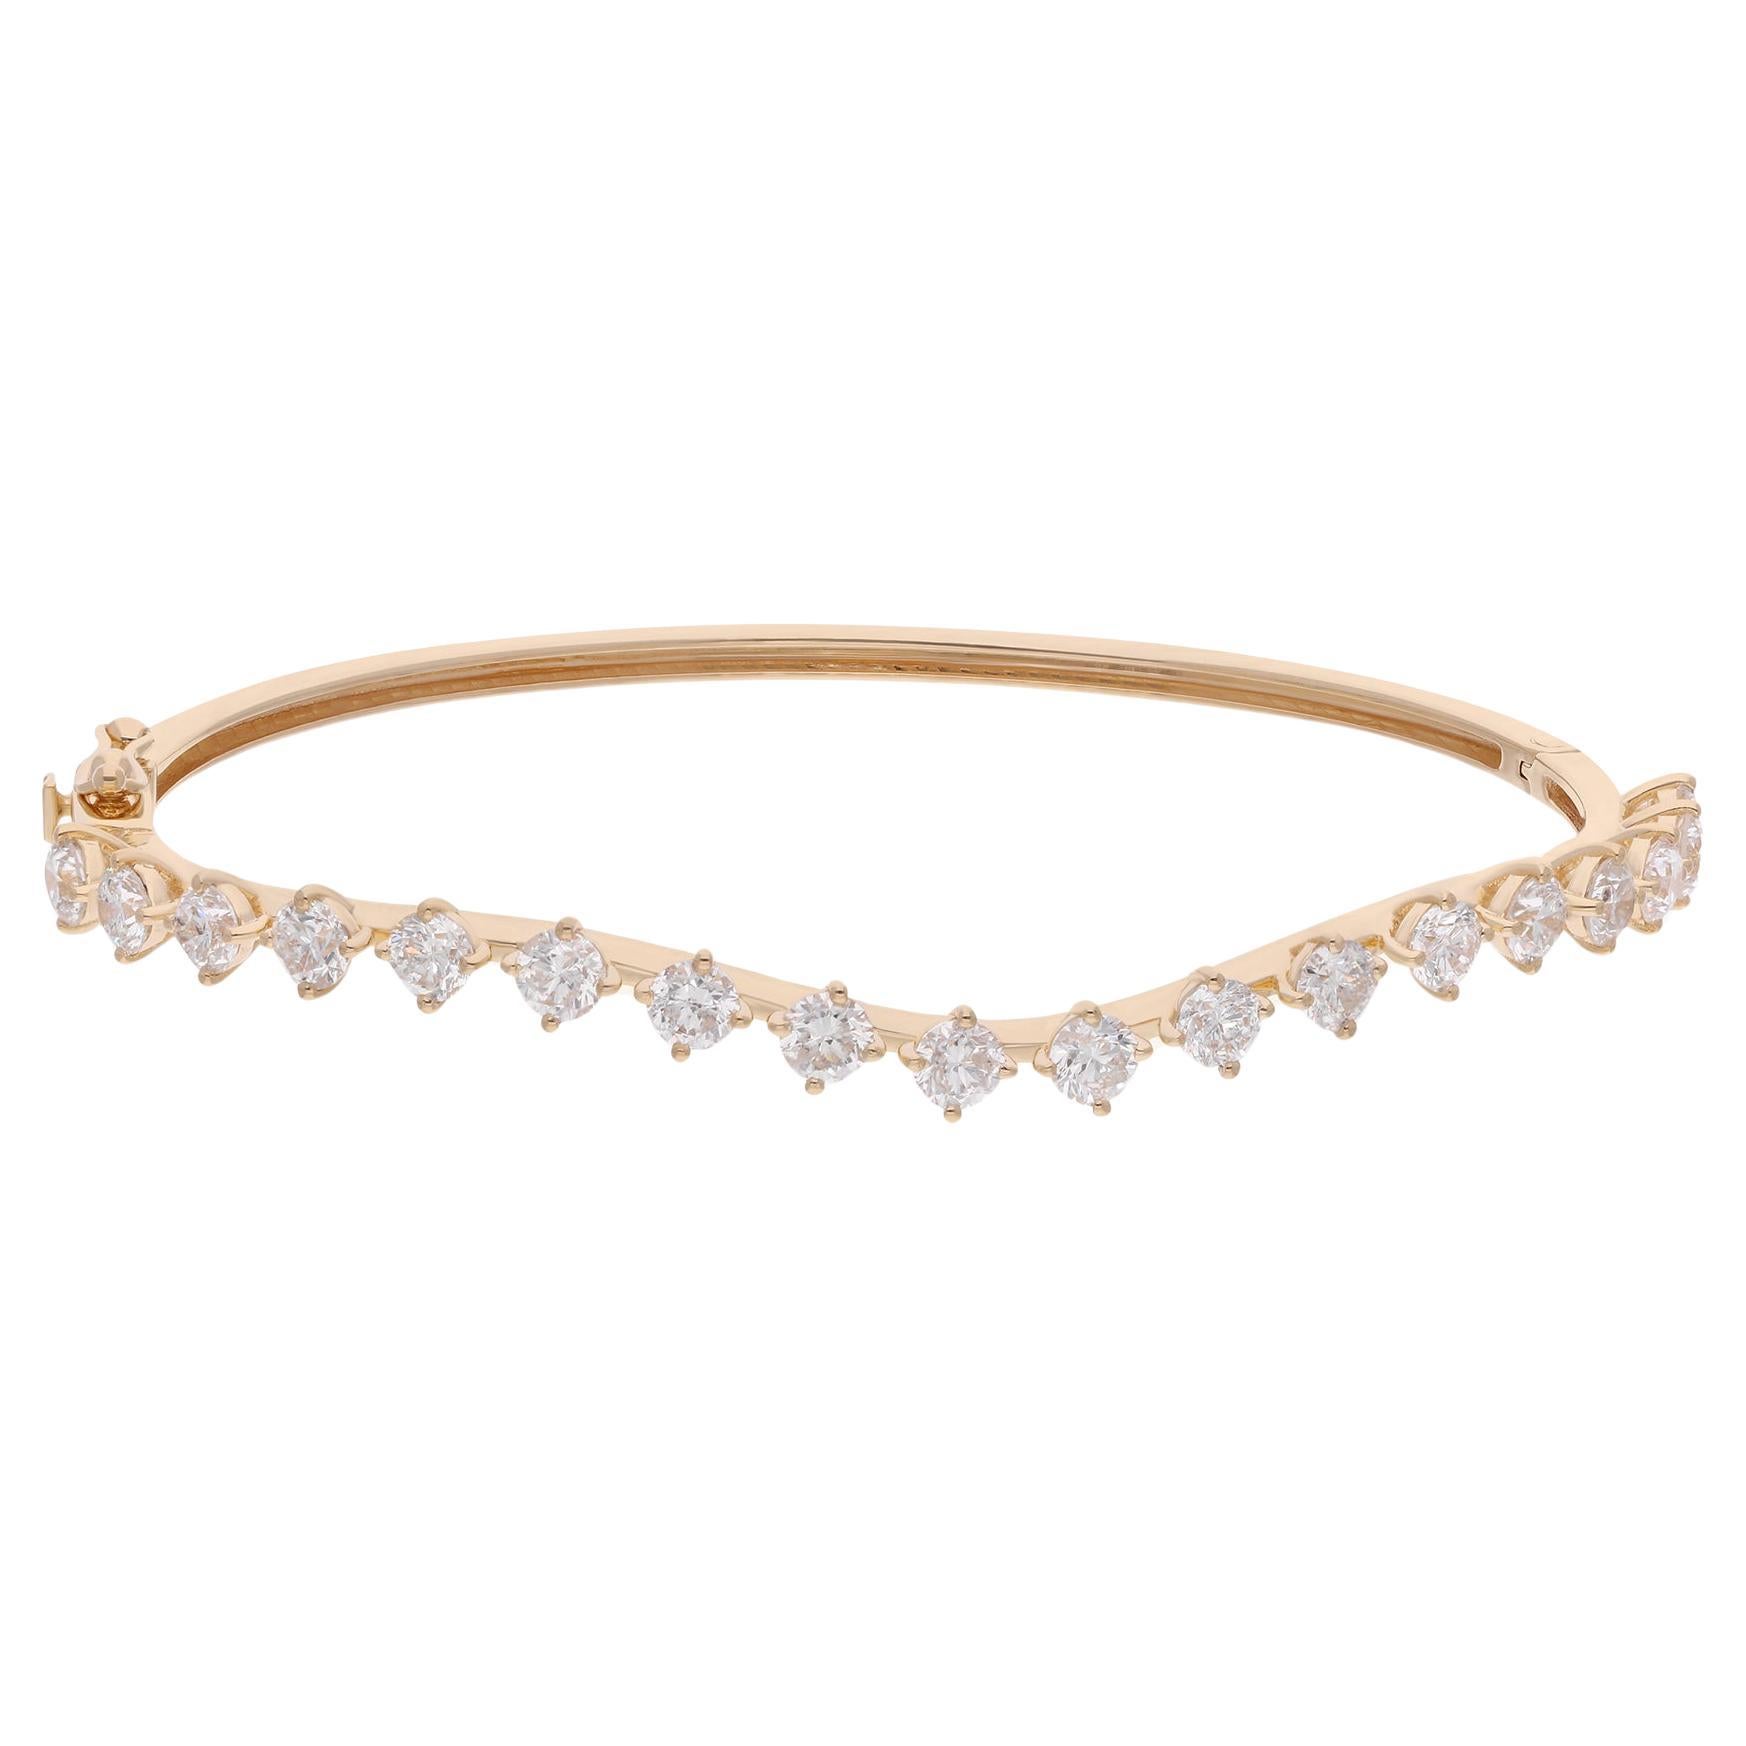 Amazon.com: Shop LC Diamond Bangle Bracelet - Woven Silvertone Bracelets  for Women - Formal Bangles with Real Diamonds - 7